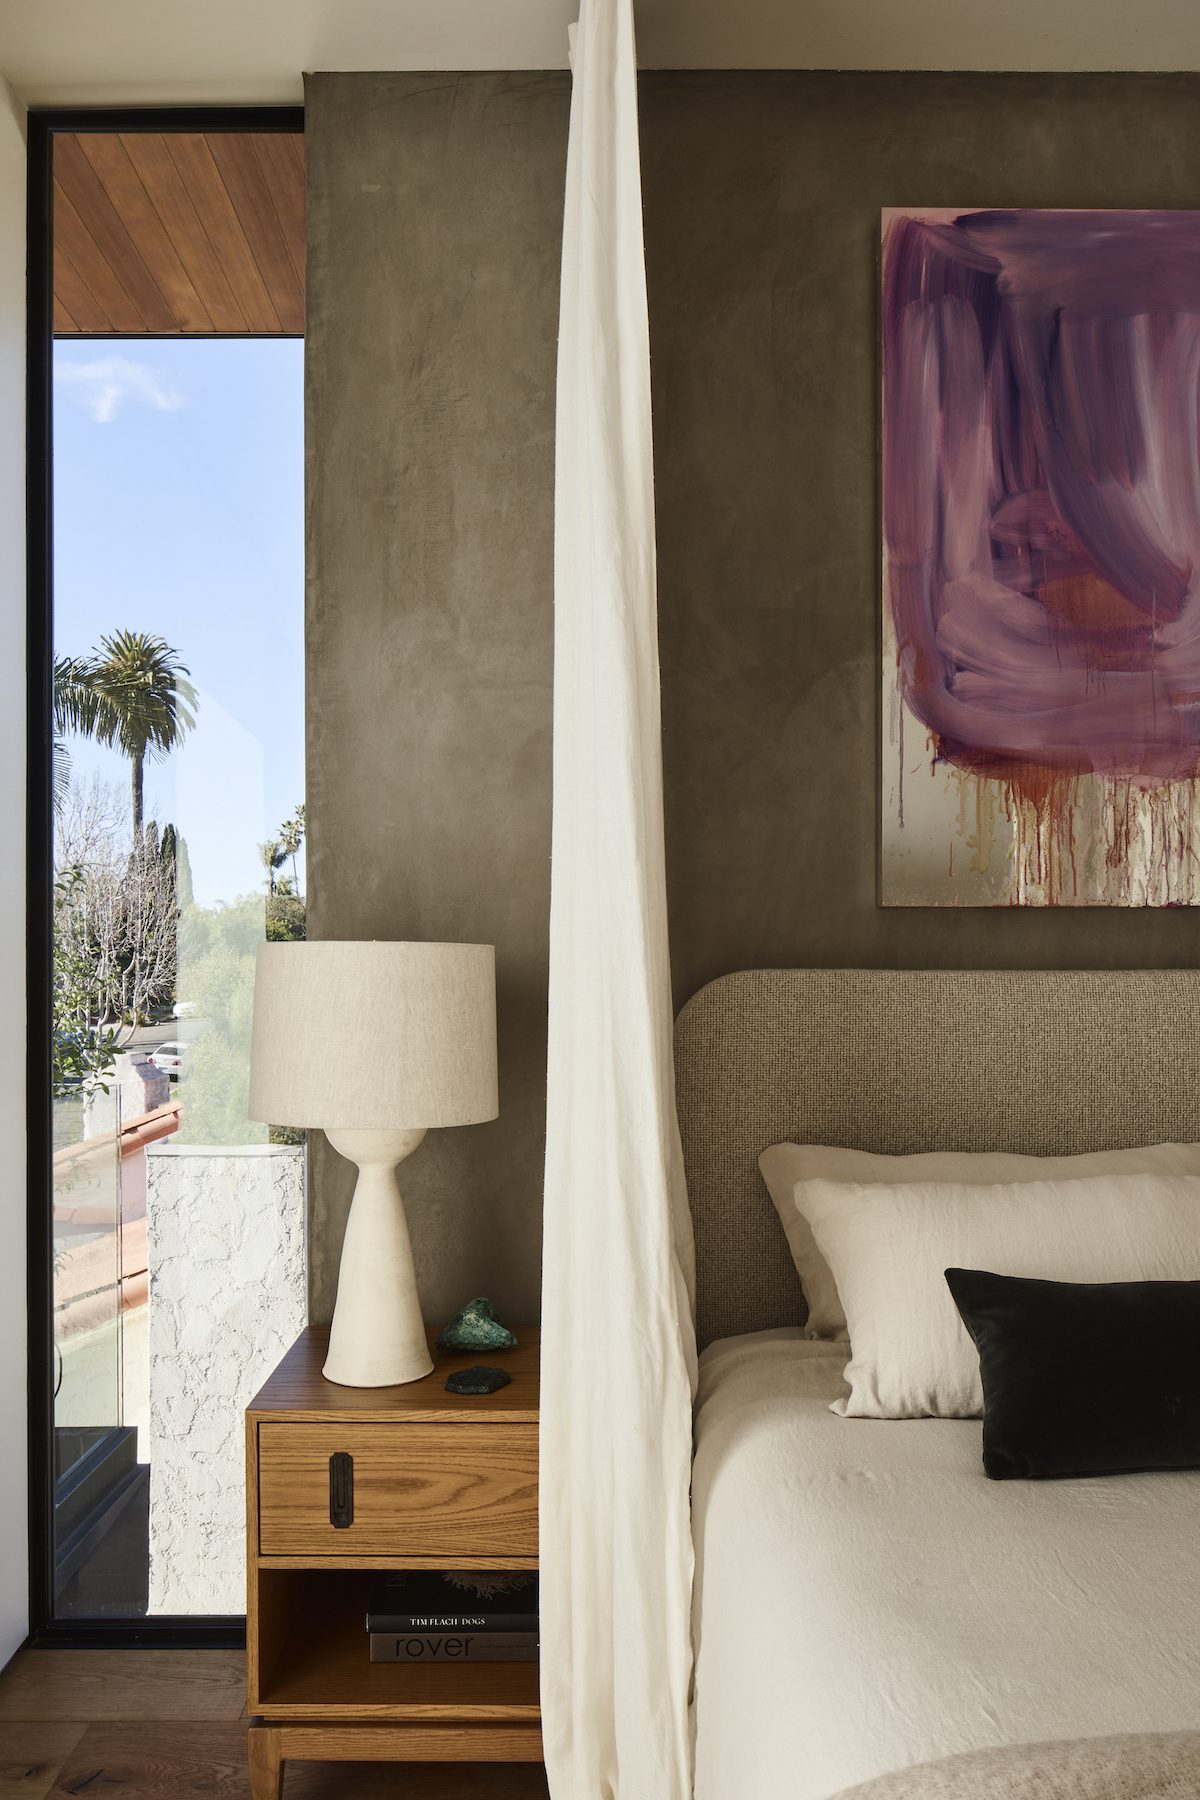 celebrity designer bedroom with purple art and art deco furniture